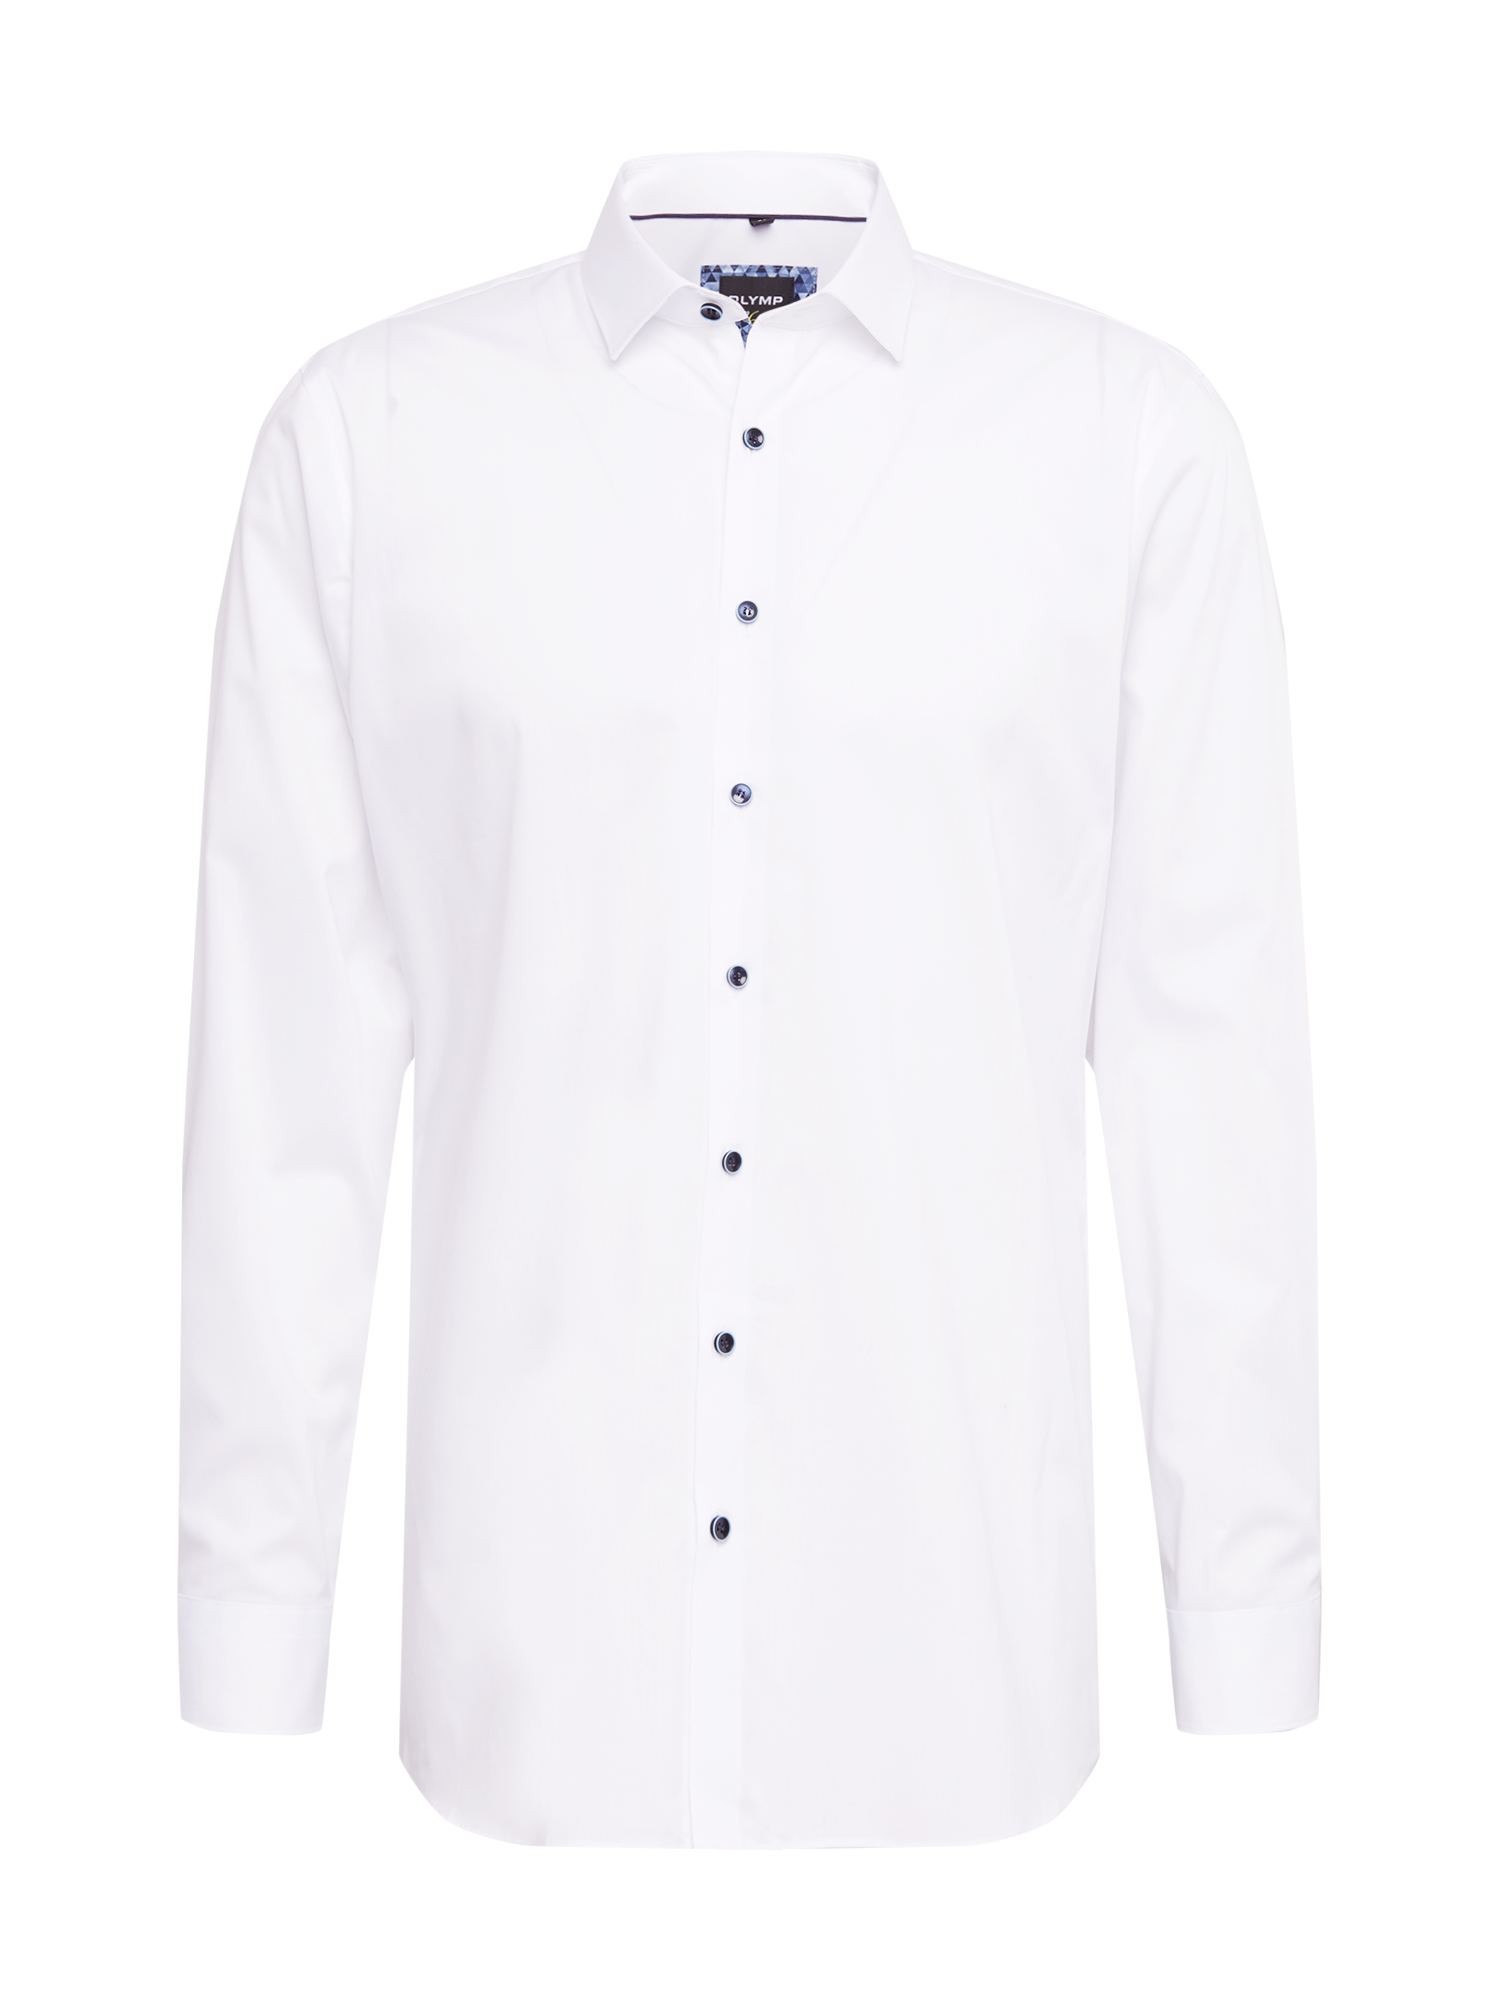 Occasioni Uomo OLYMP Camicia business in Bianco 